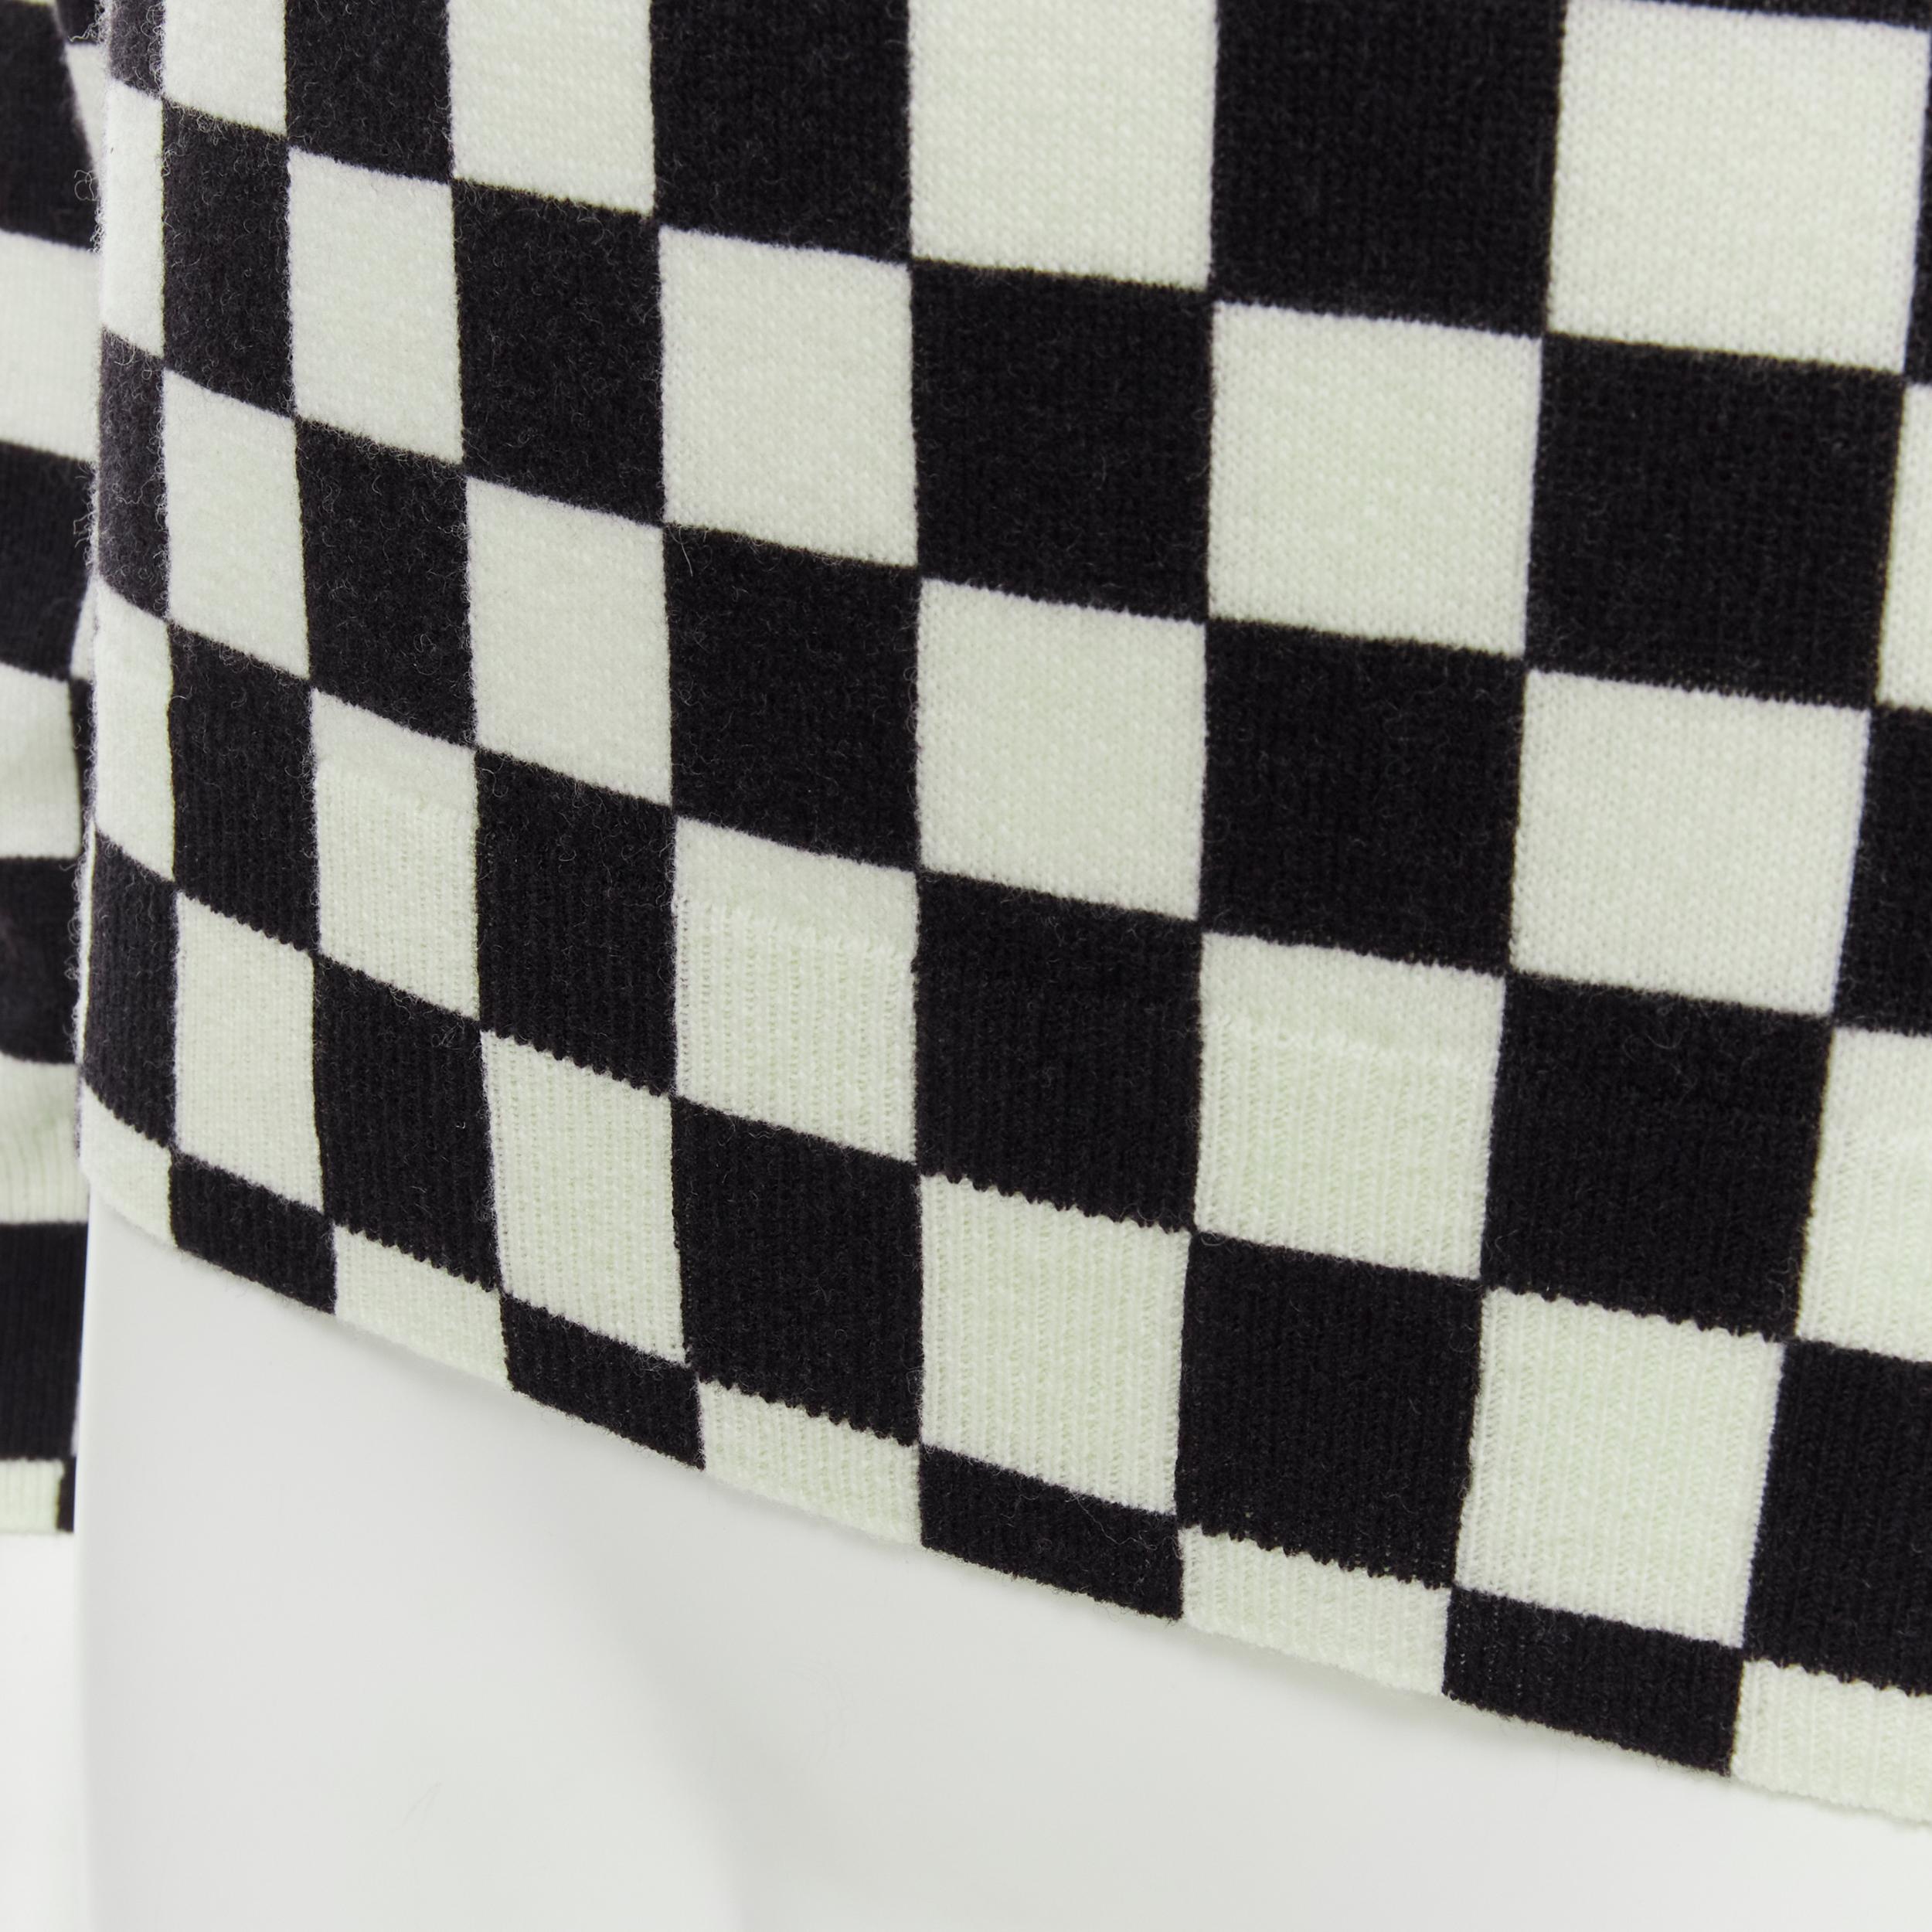 new CELINE Hedi Slimane 2019 Runway black white Damier checkered polo sweater M 3